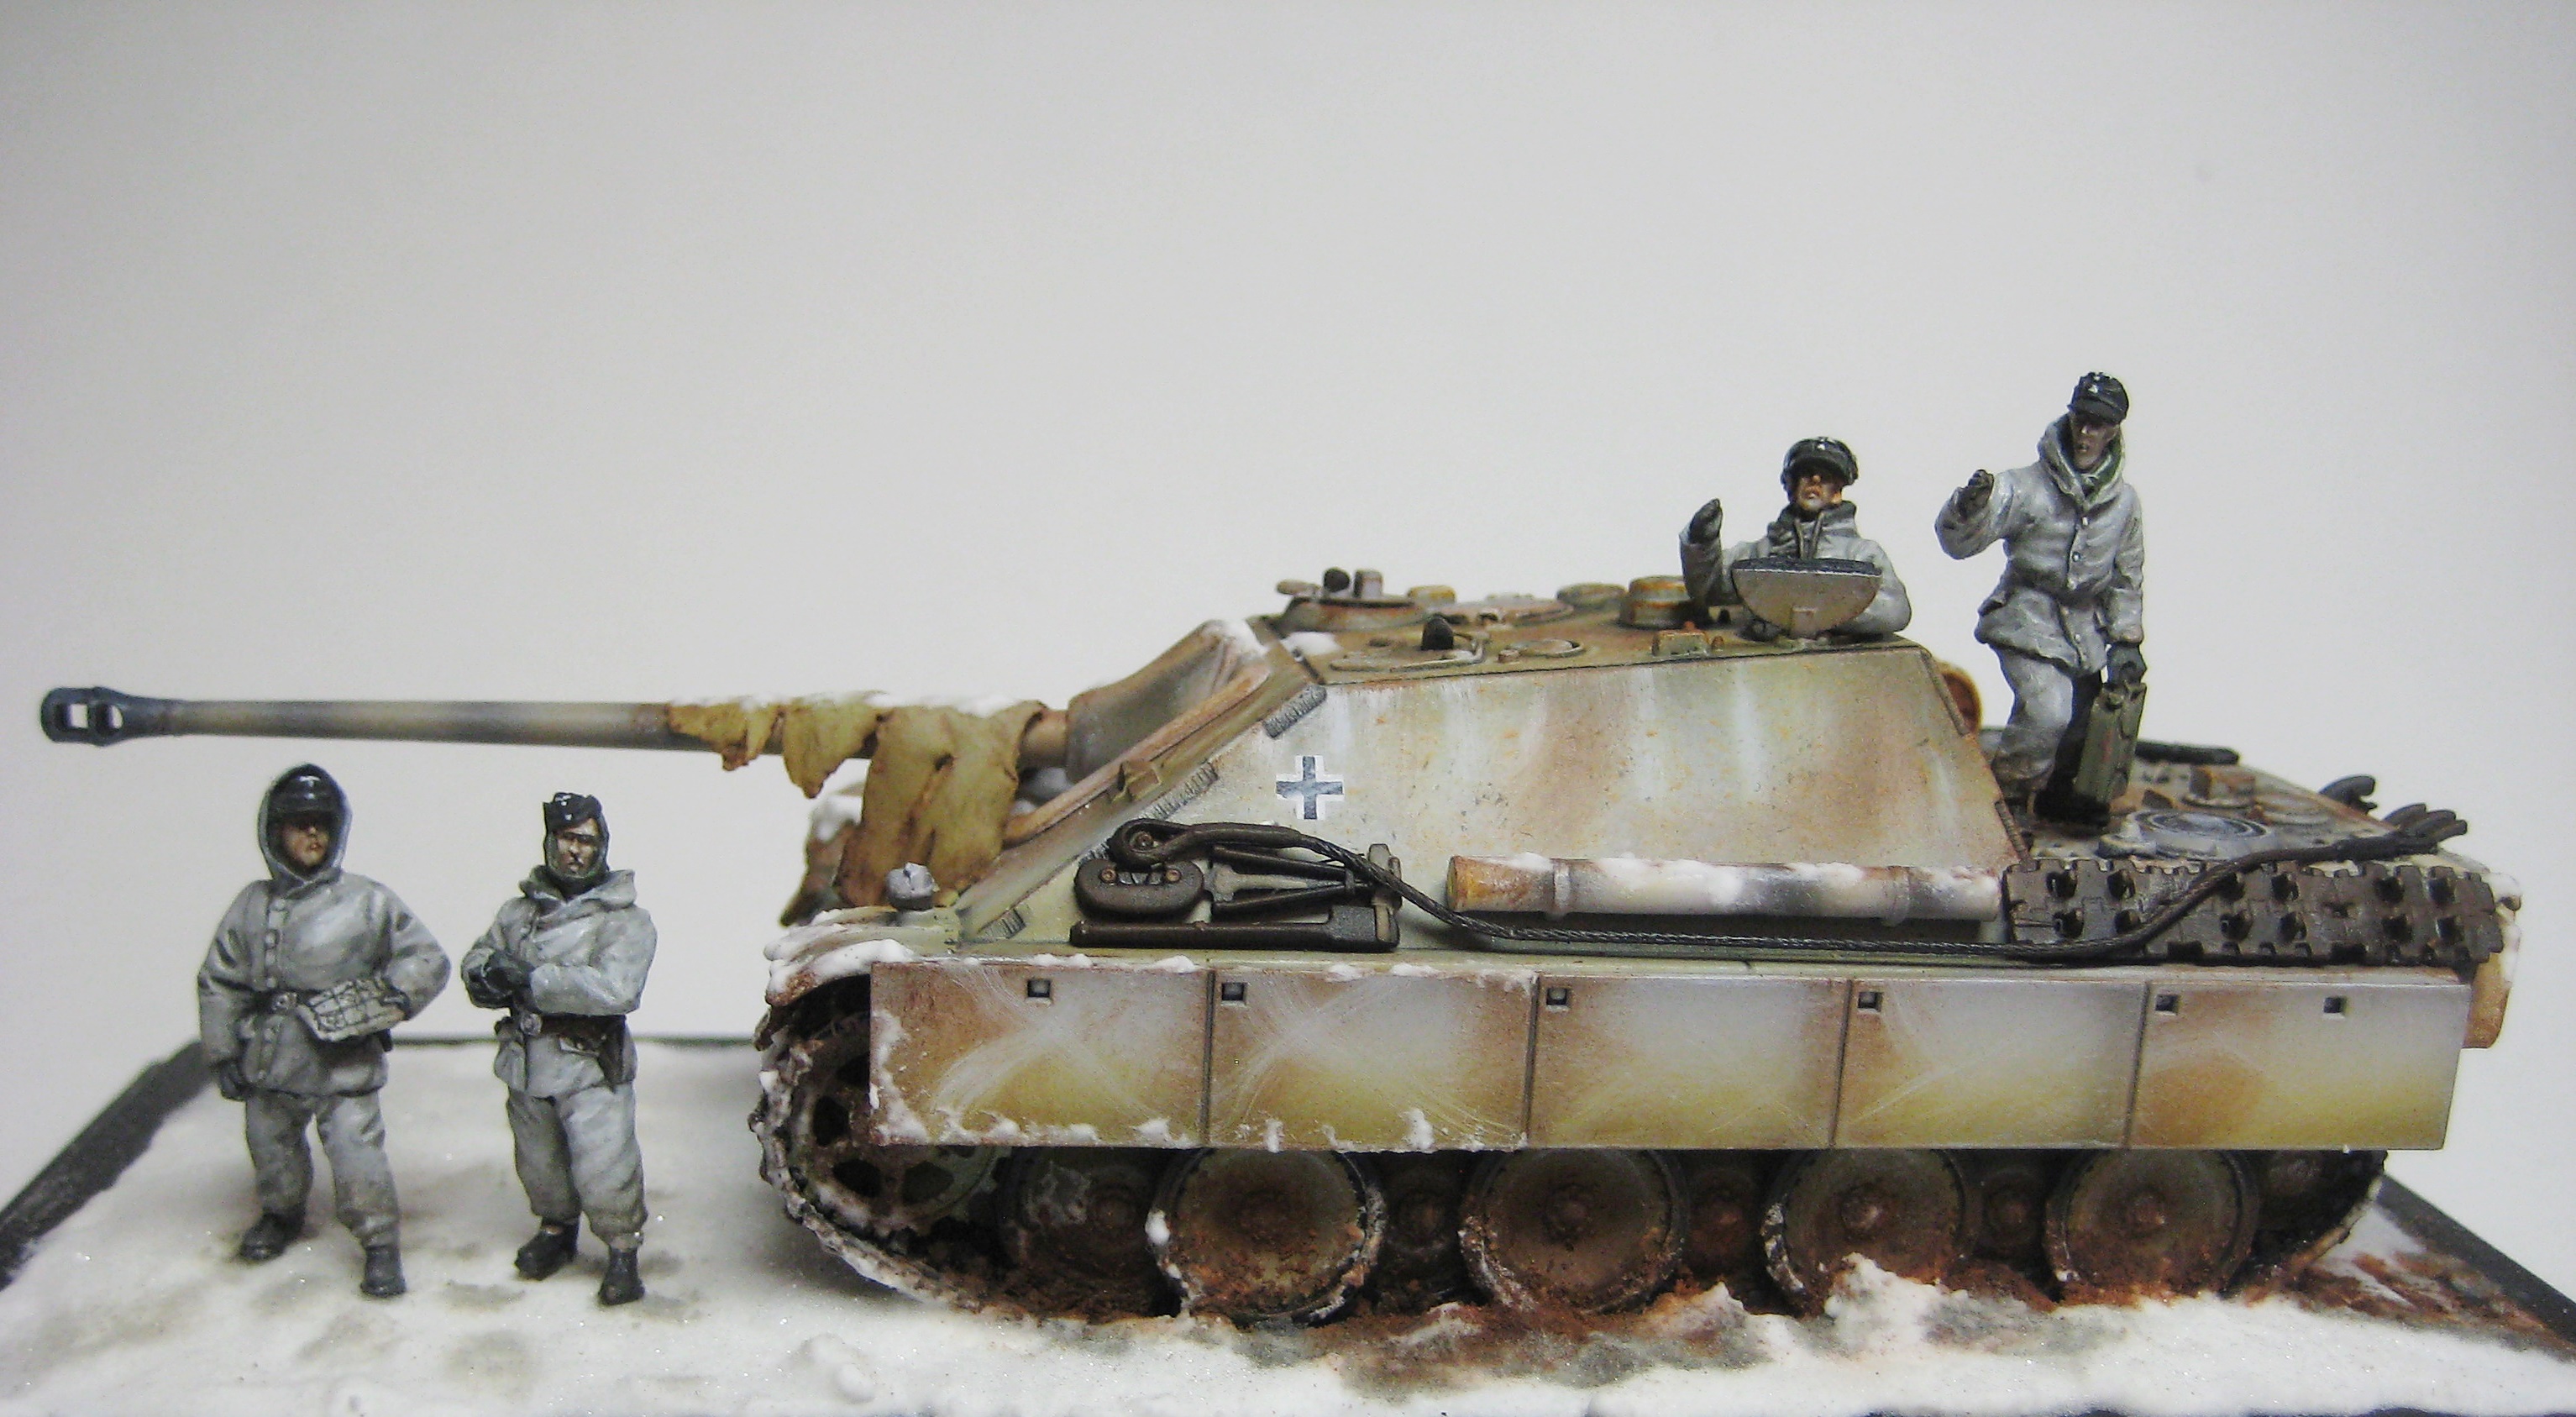 Unpainted no tank 1/35 Resin Figure Model Kit German Soldiers Tank Crew WWII 